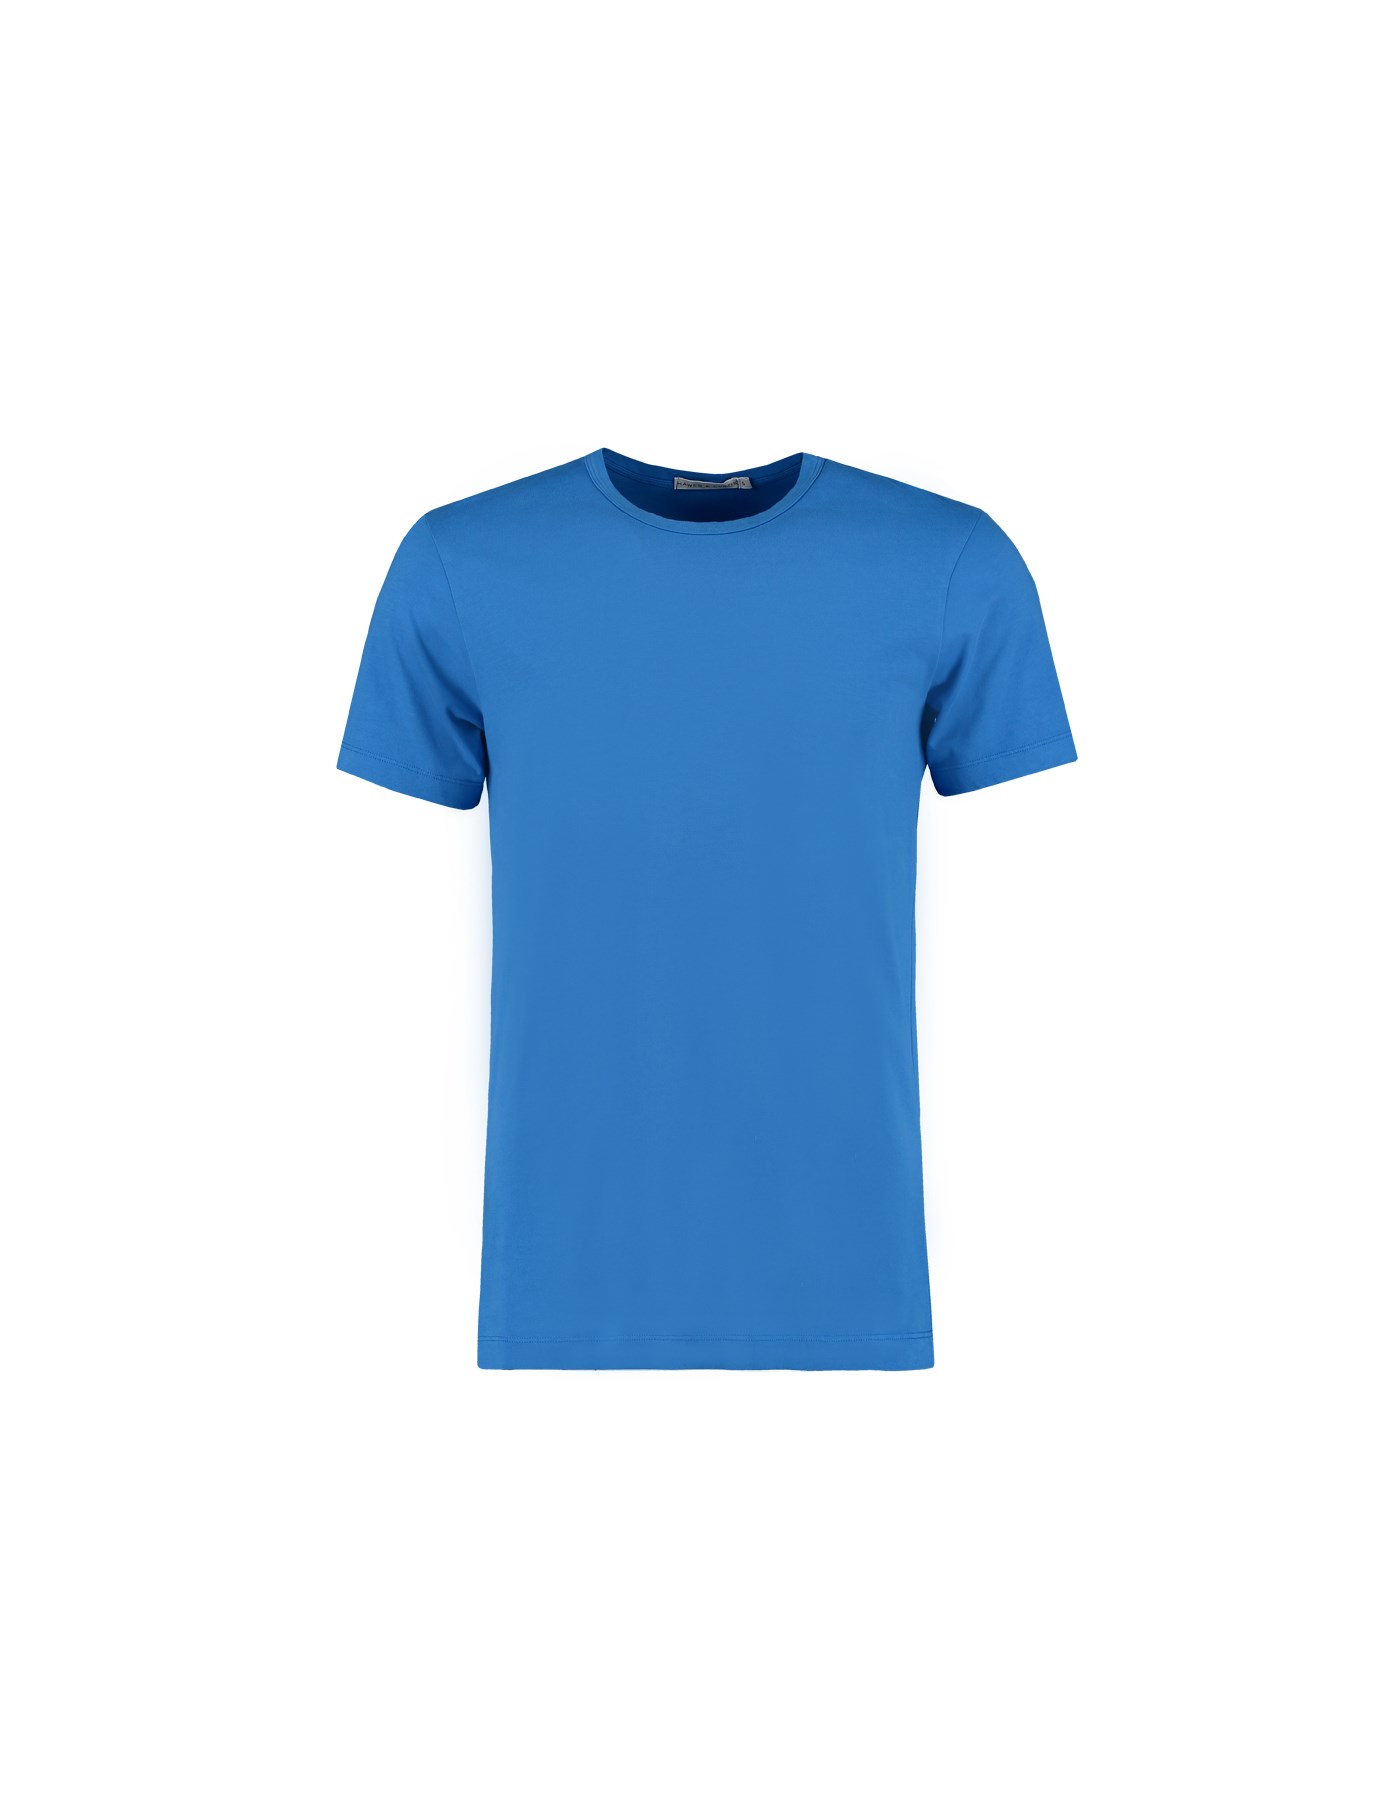 Men's Cobalt Blue Garment Dye Crew Neck T-Shirt - 100% Supima Cotton ...